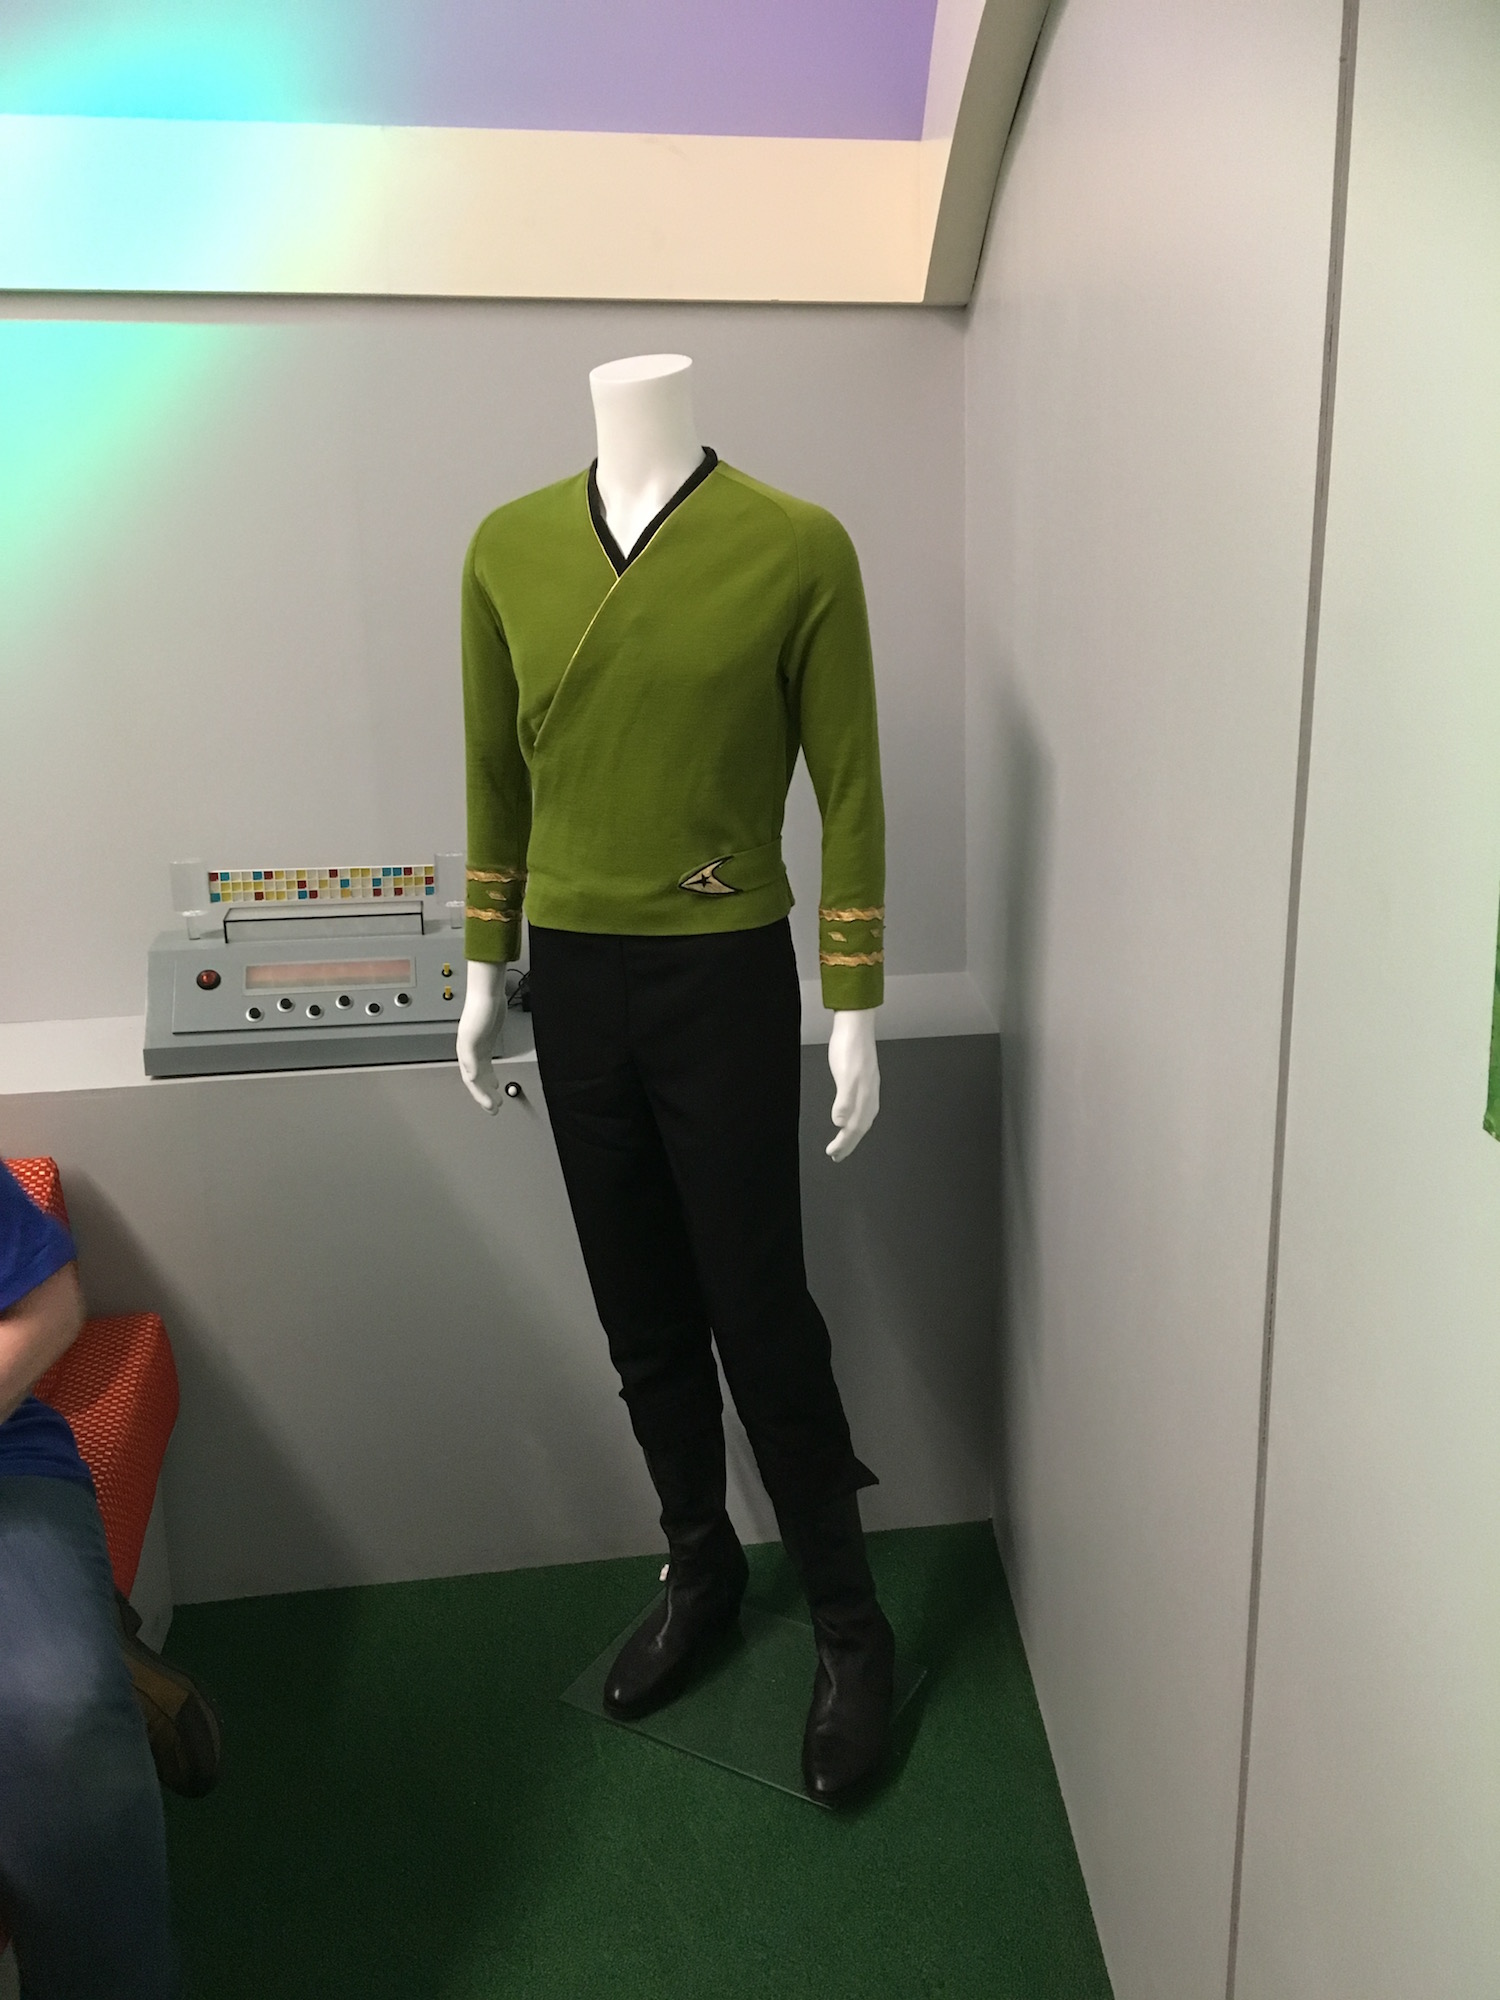  Captain Kirk’s Green Wraparound Uniform Tunic ©2017 David R. George III 